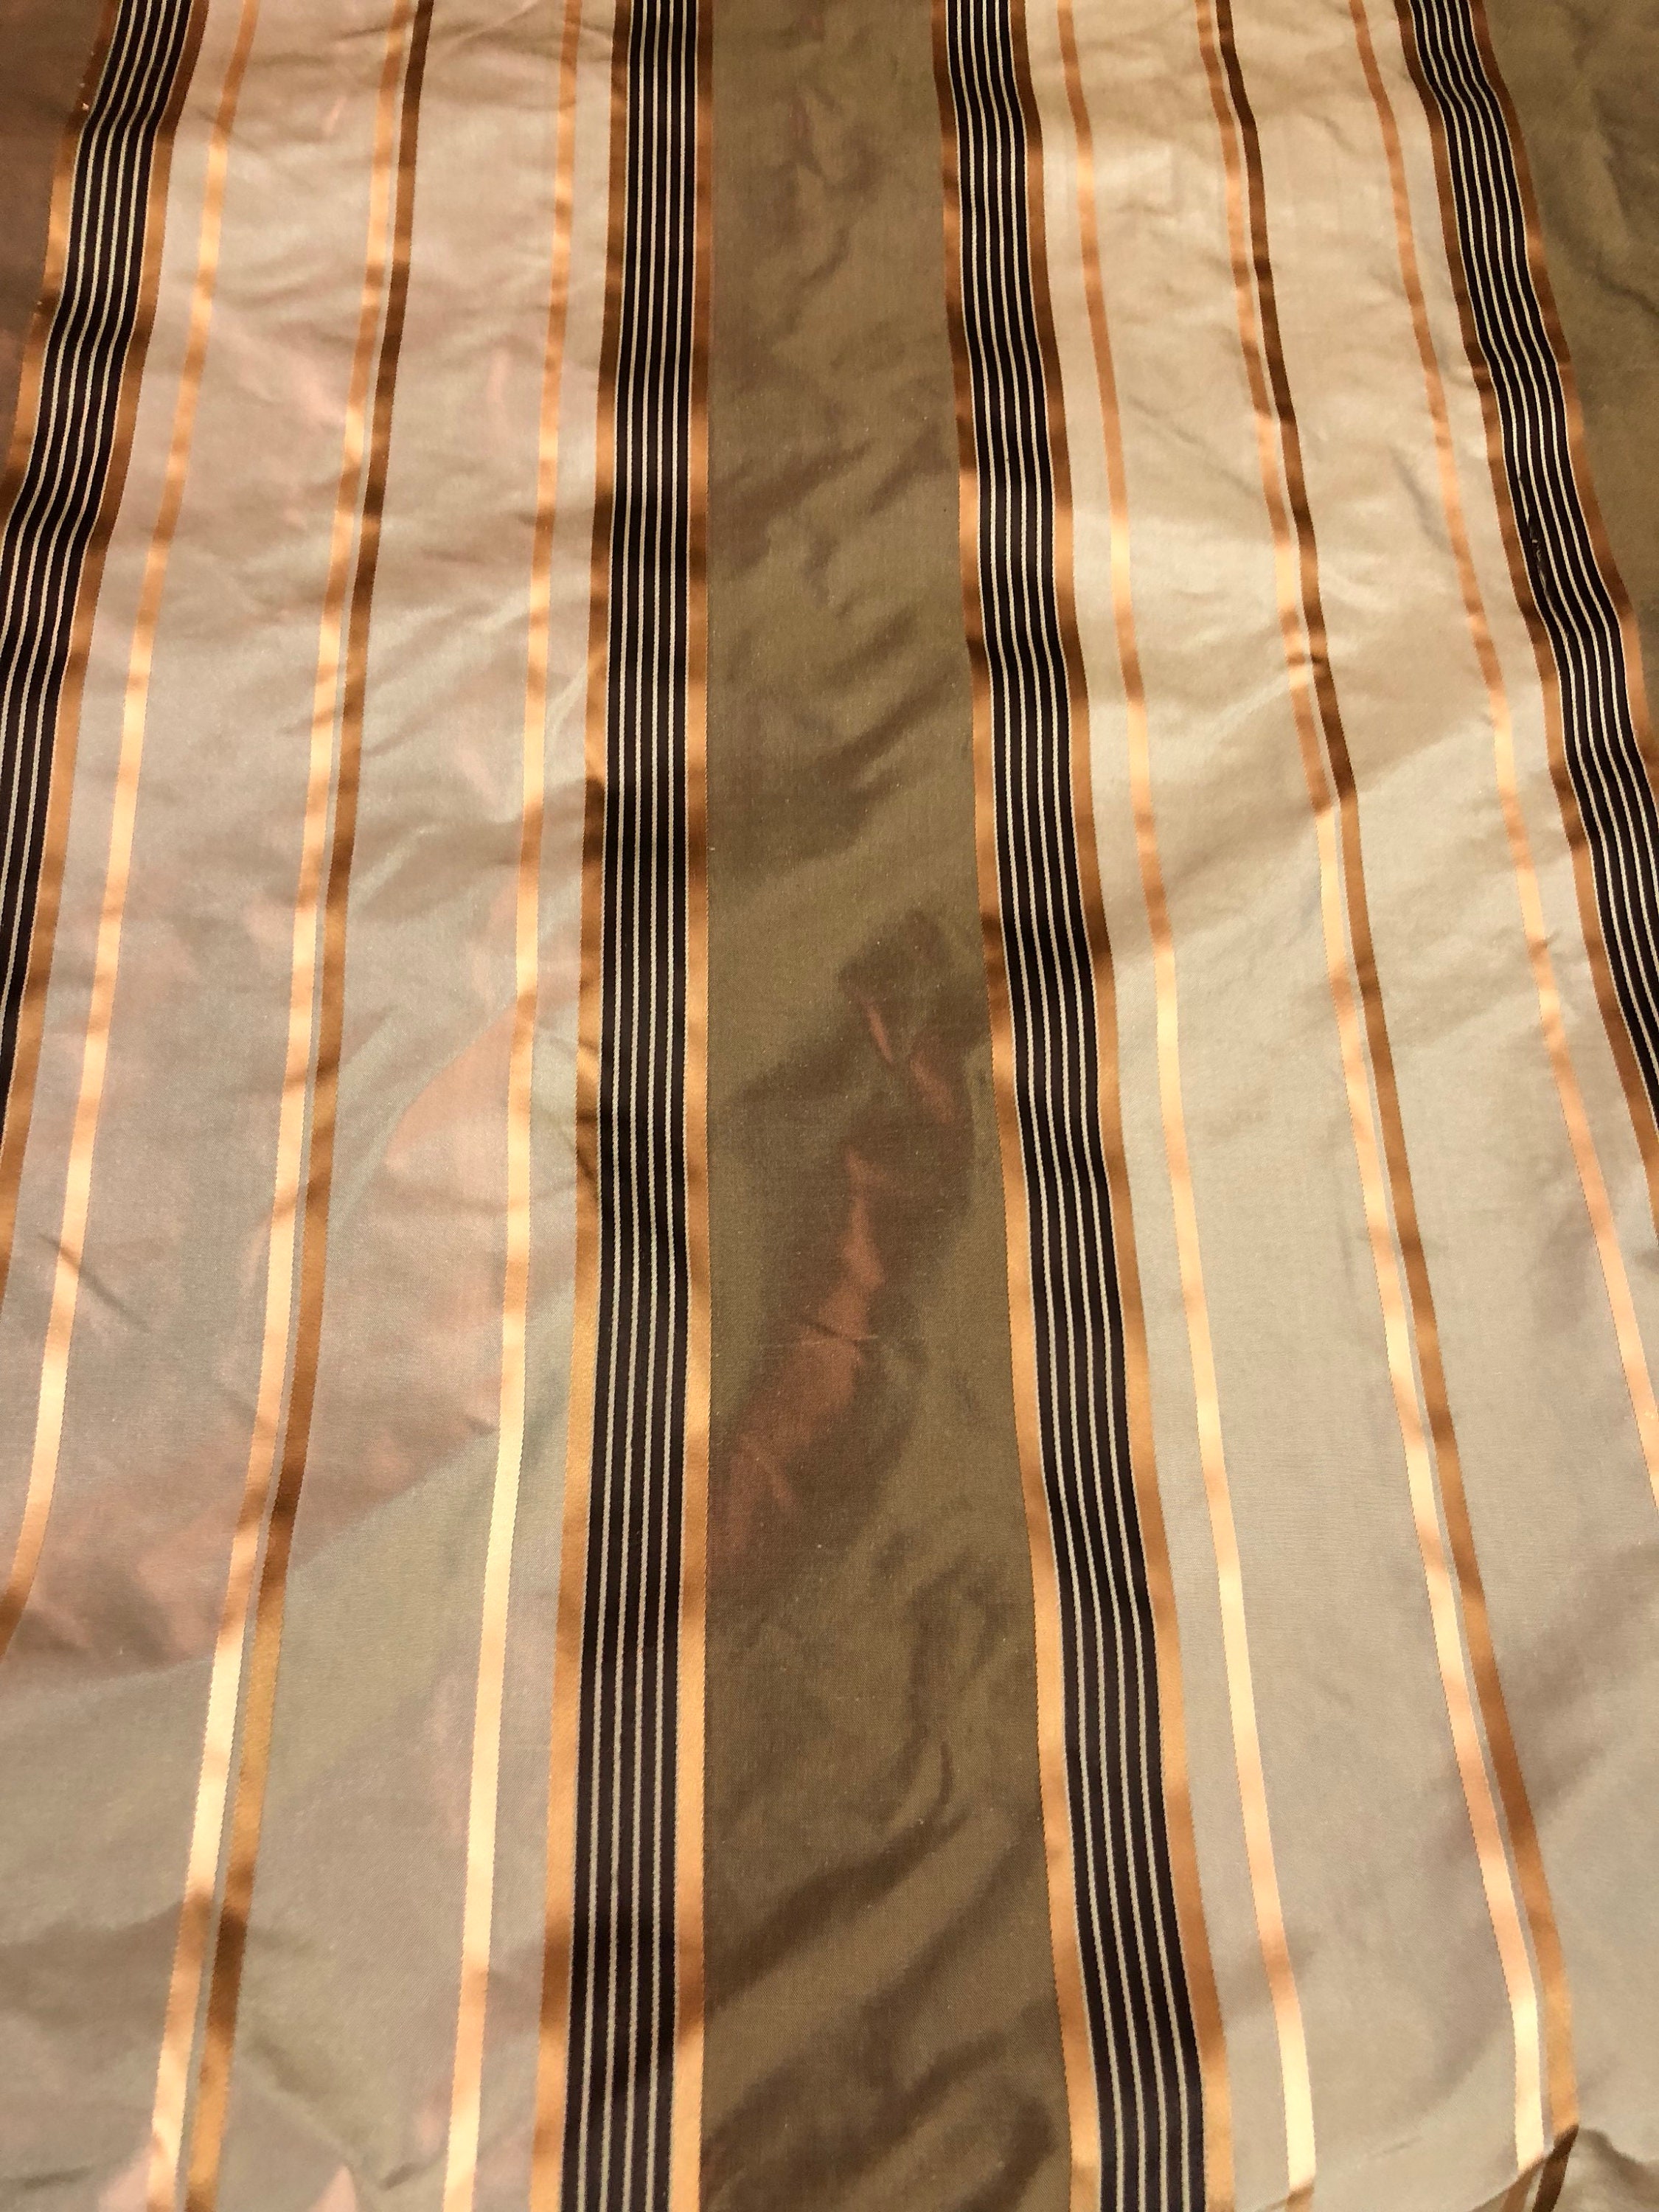 100% silk satin stripe taffeta 54 wide Sold by the yard